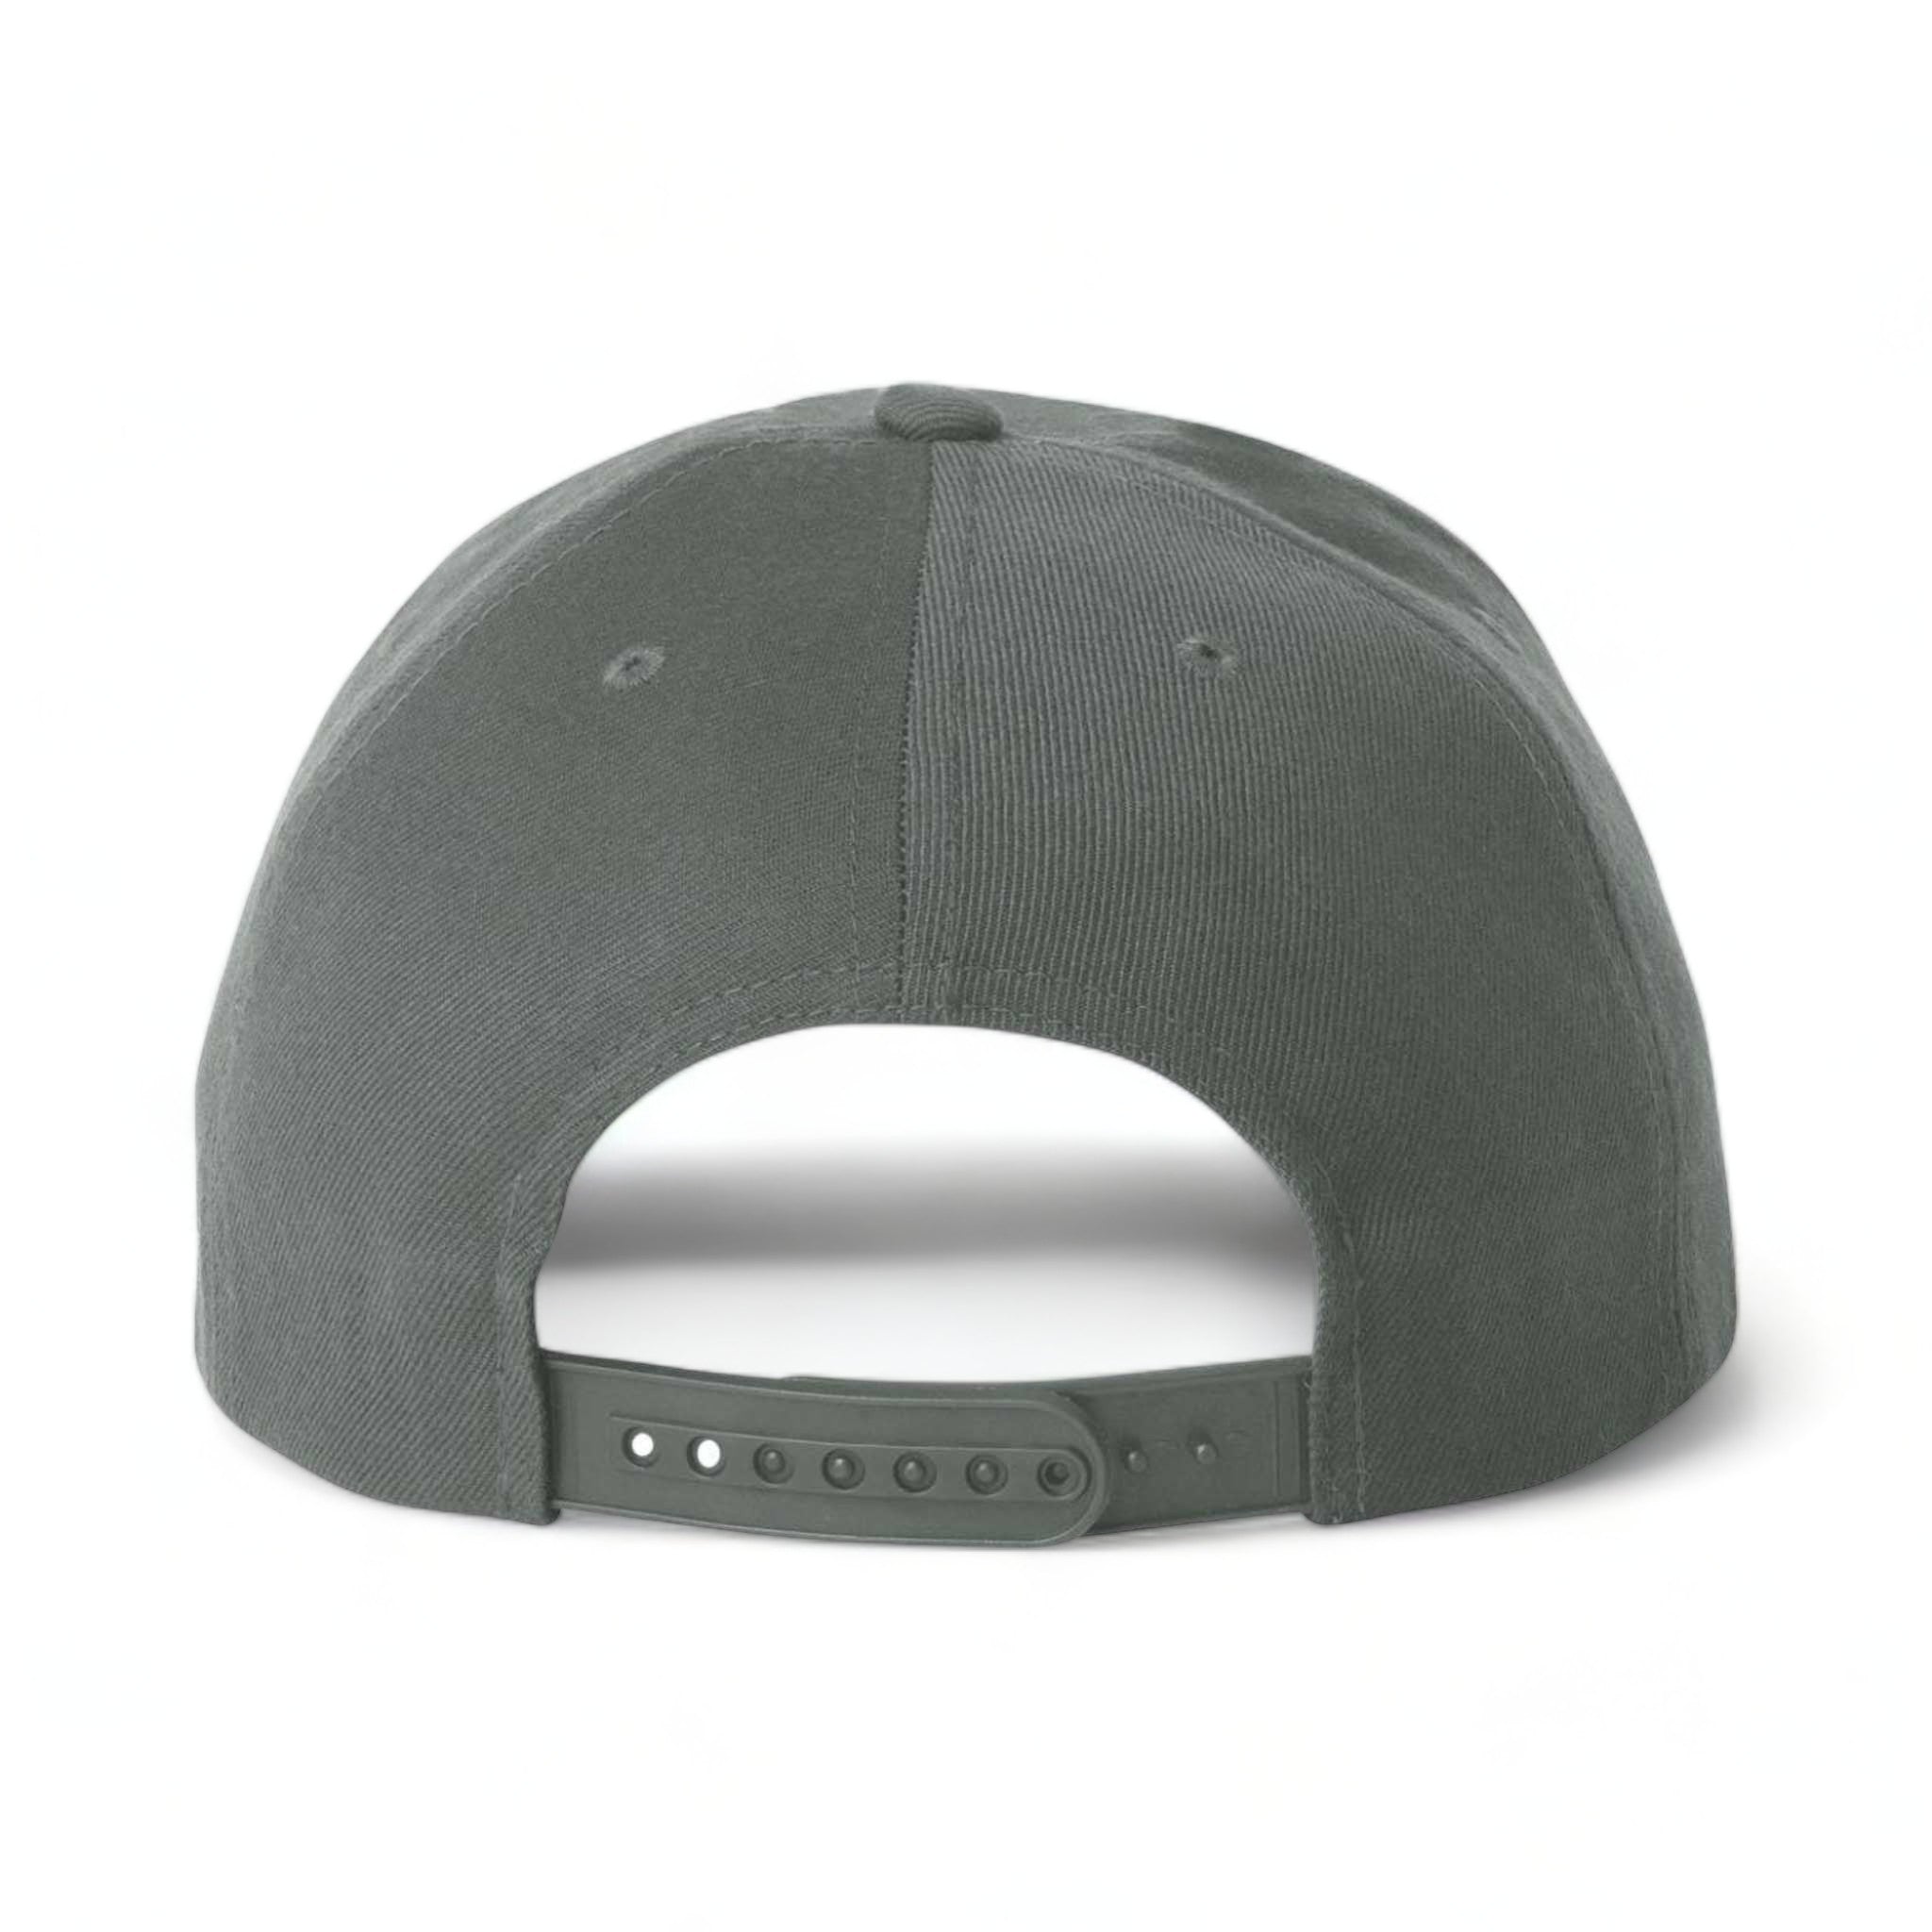 Back view of YP Classics 6089M custom hat in dark grey